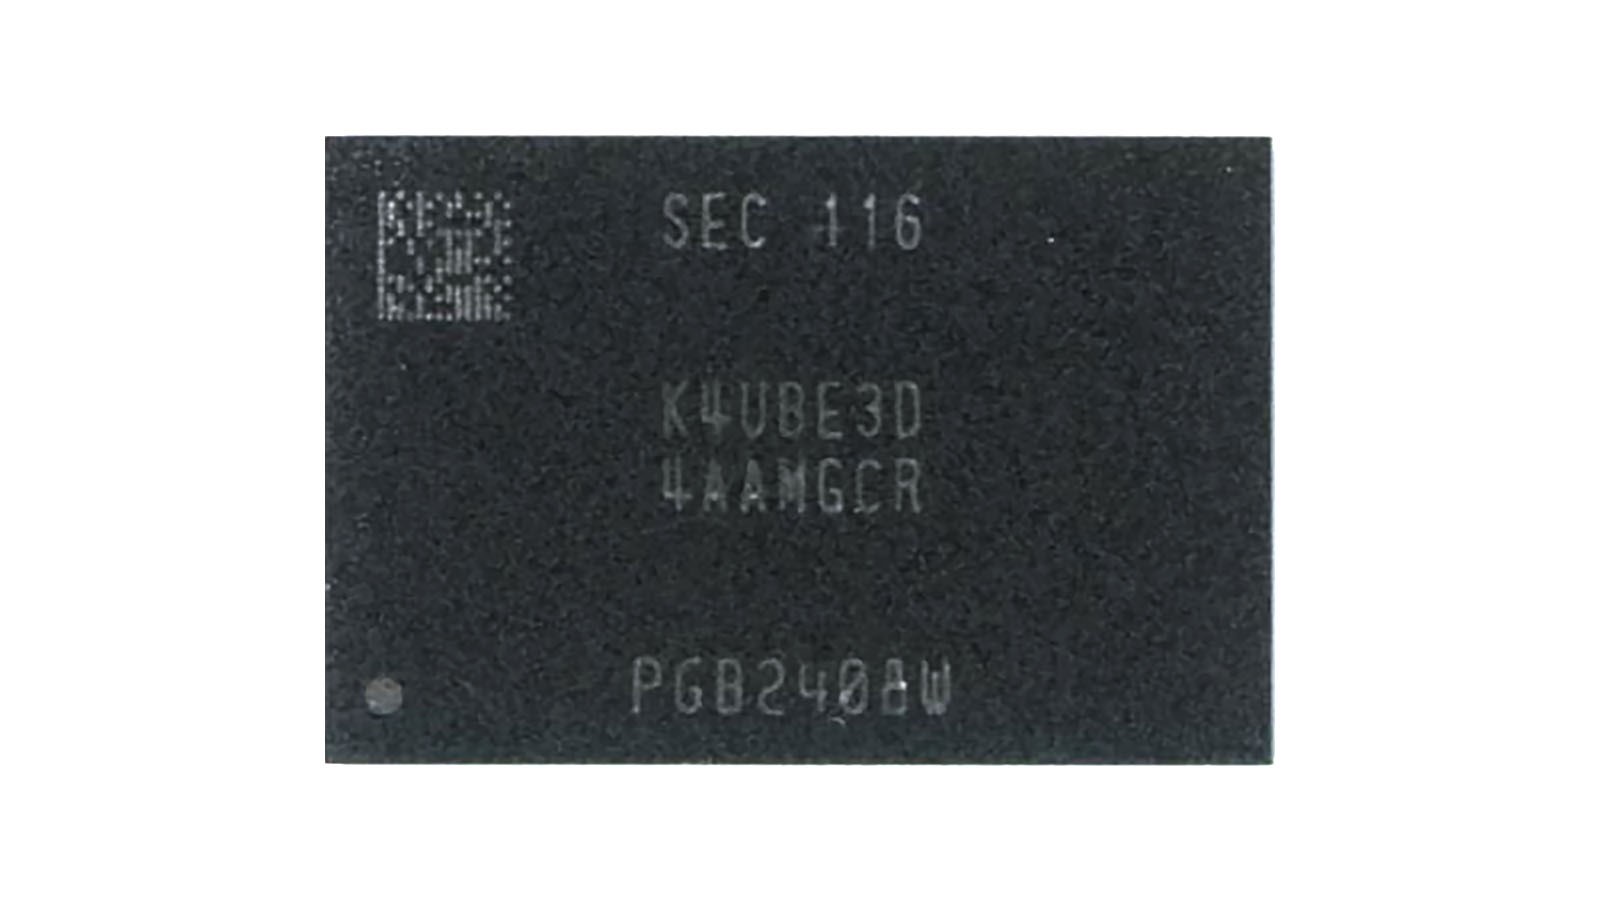 Оперативная память DDR4  K4UBE3D4AA MGCR  4Gb  21год.